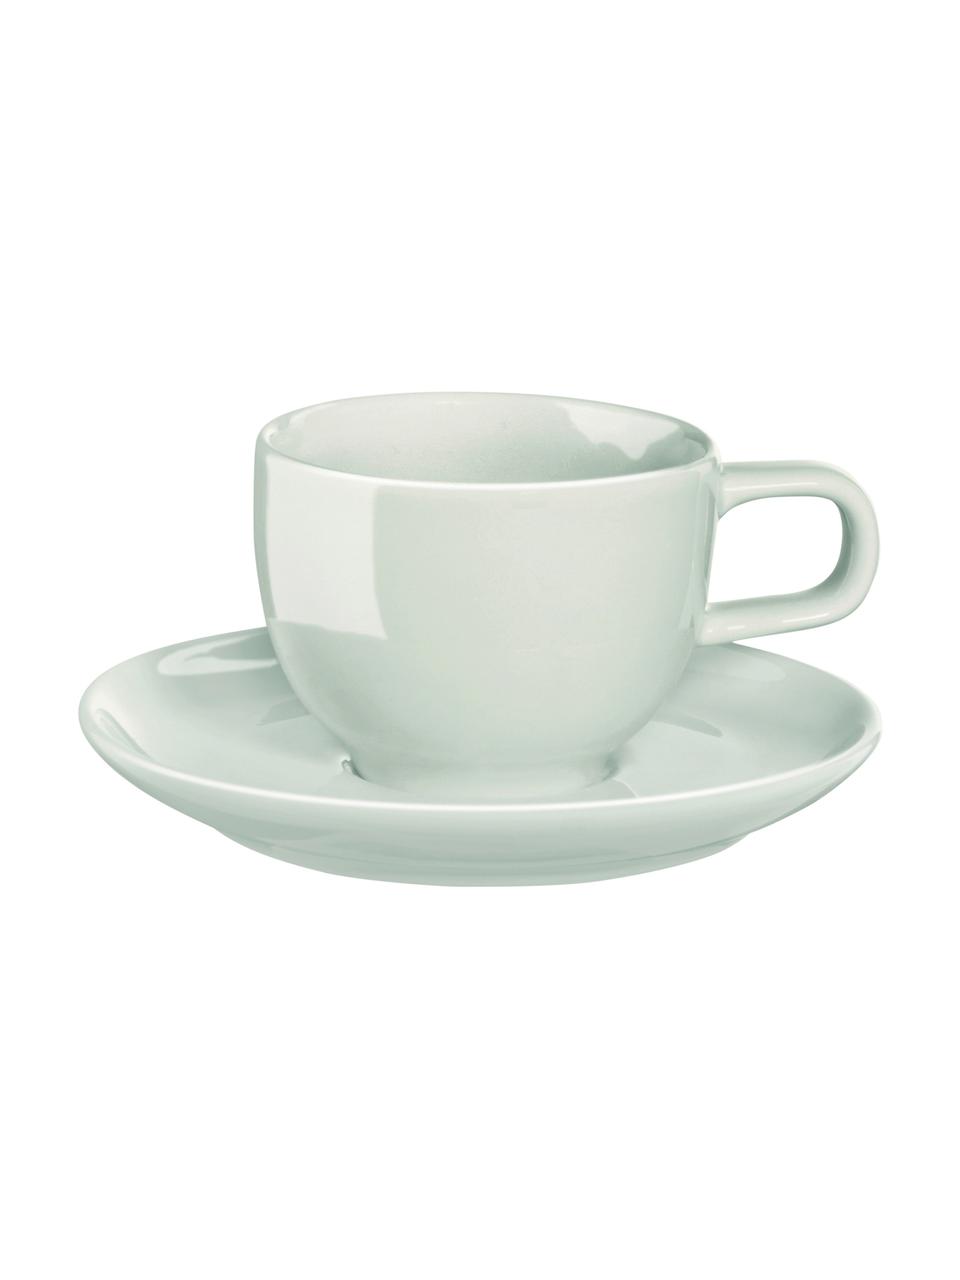 Porzellan-Espressotassen Kolibri mit Untertasse in Mintgrün glänzend, 6 Stück, Porzellan, Mintgrün, Ø 6 x H 12 cm